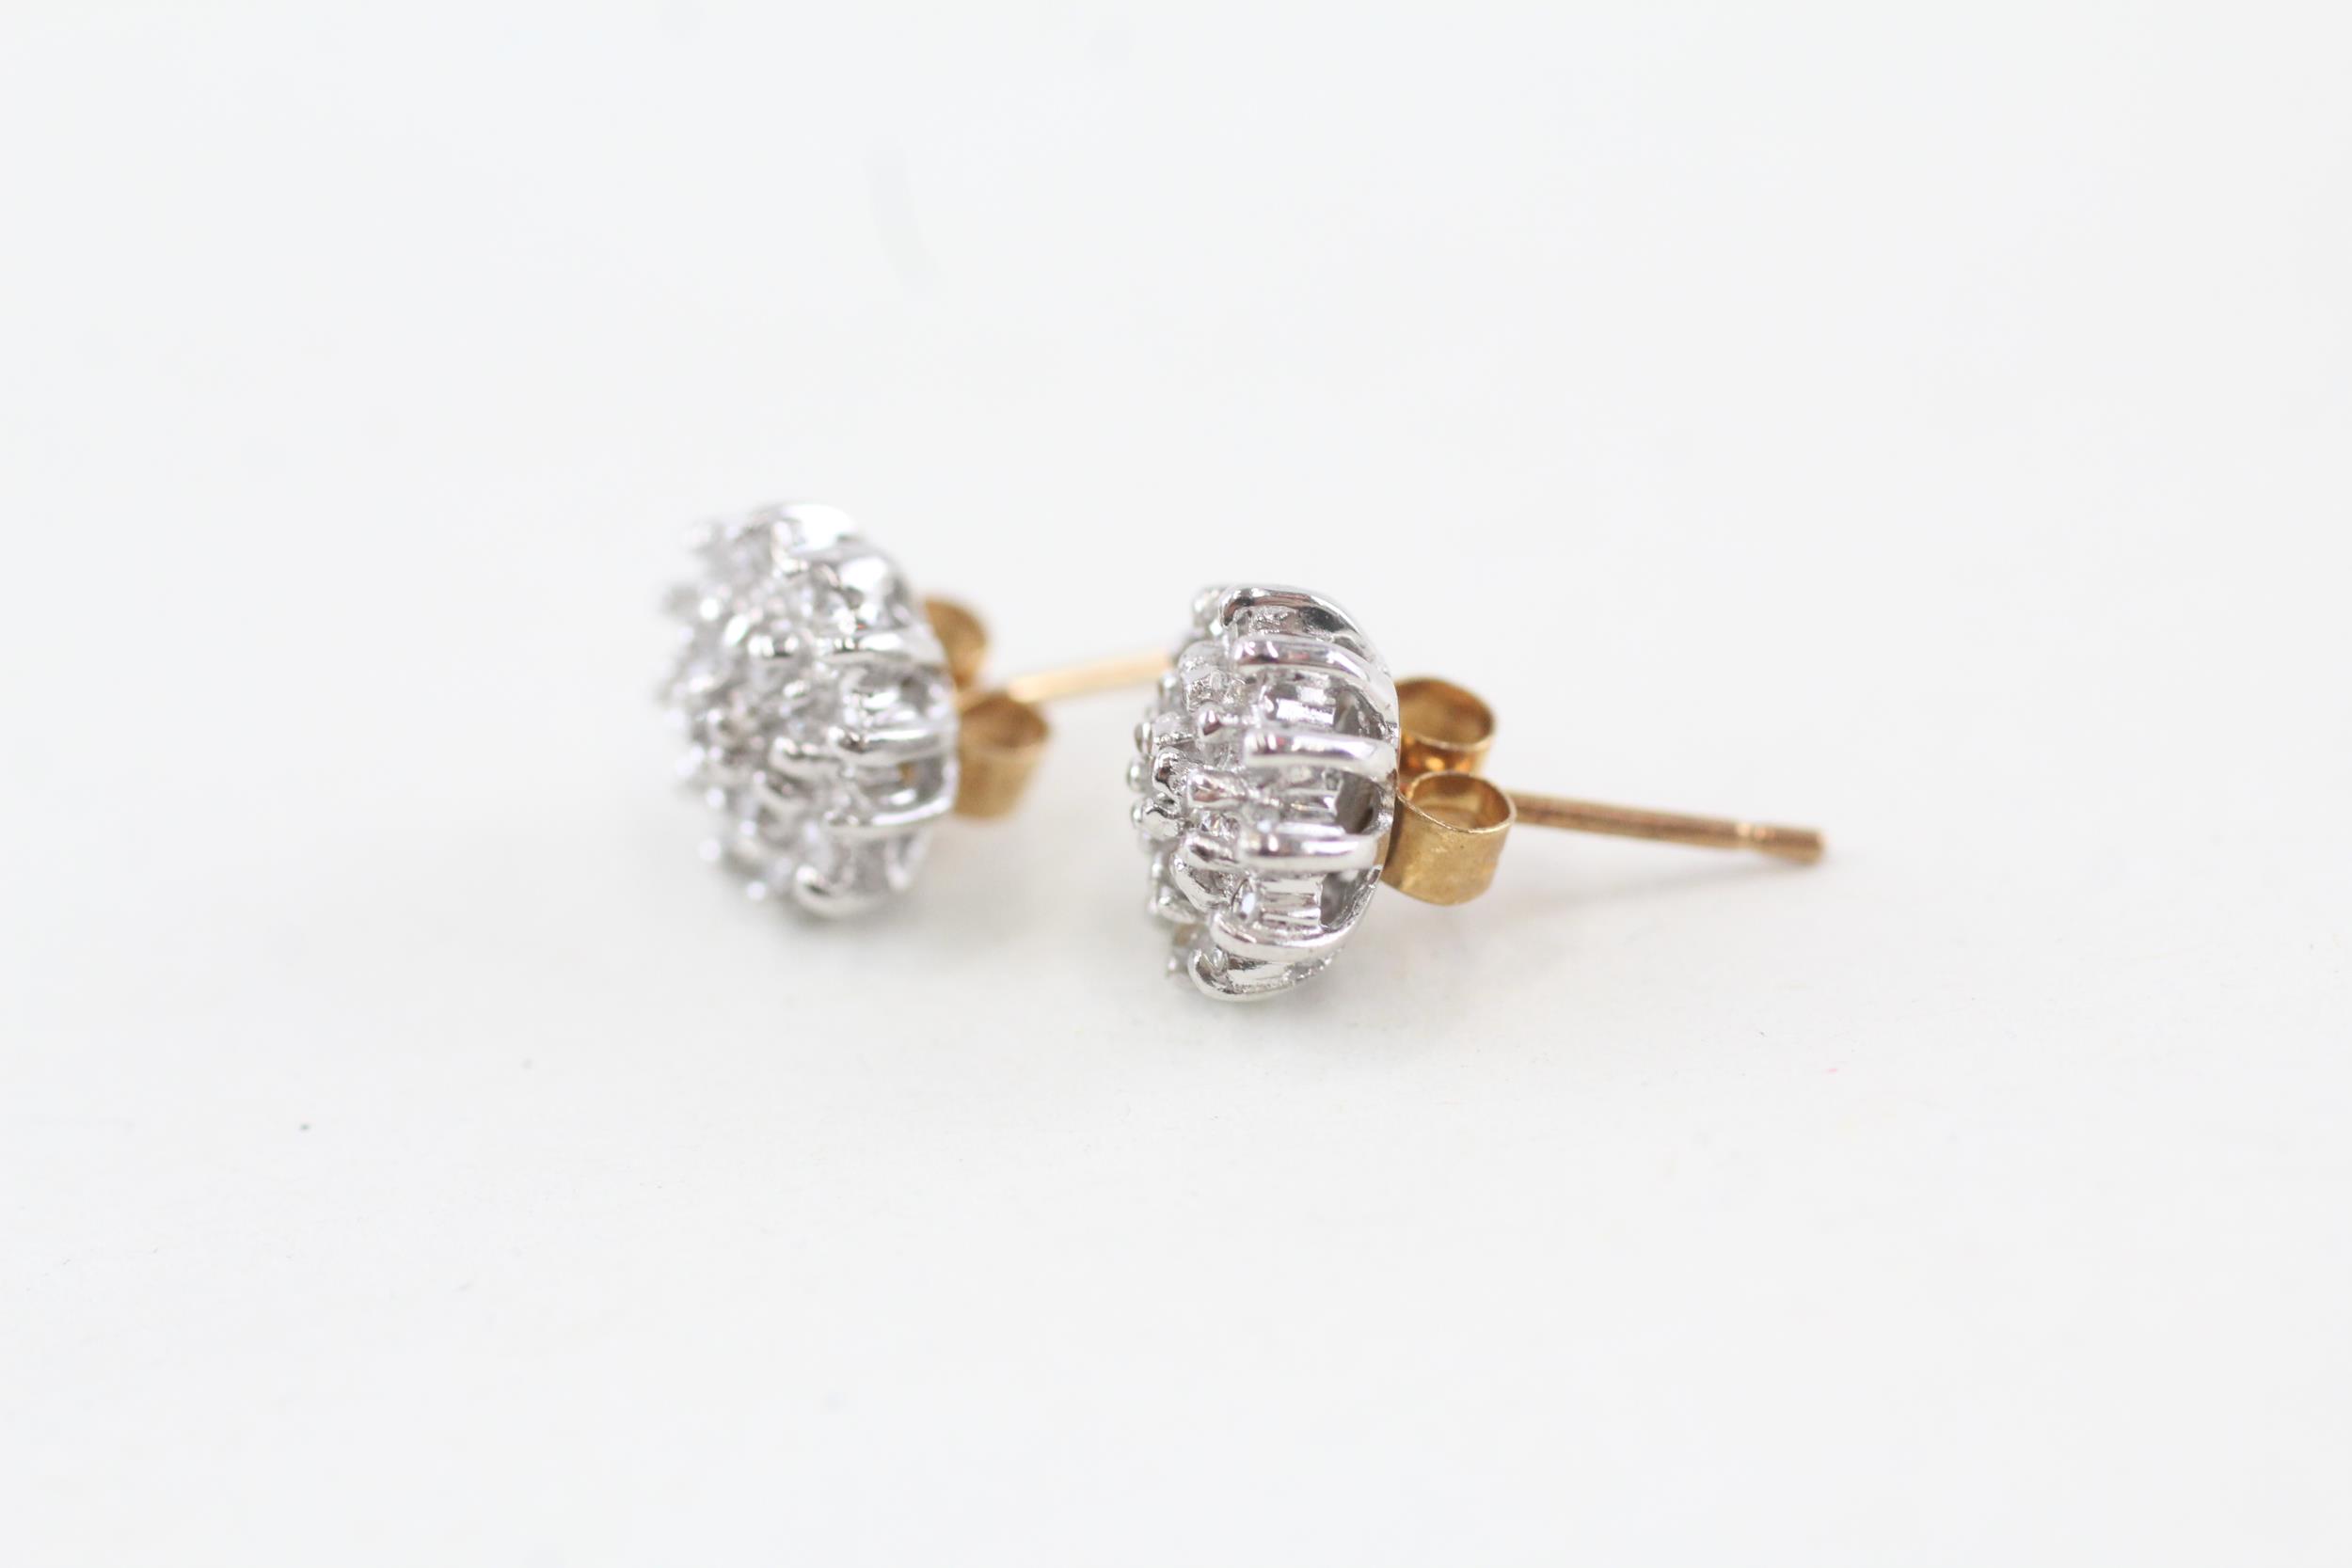 9ct gold diamond set cluster stud earrings - 1.6 g - Image 2 of 4